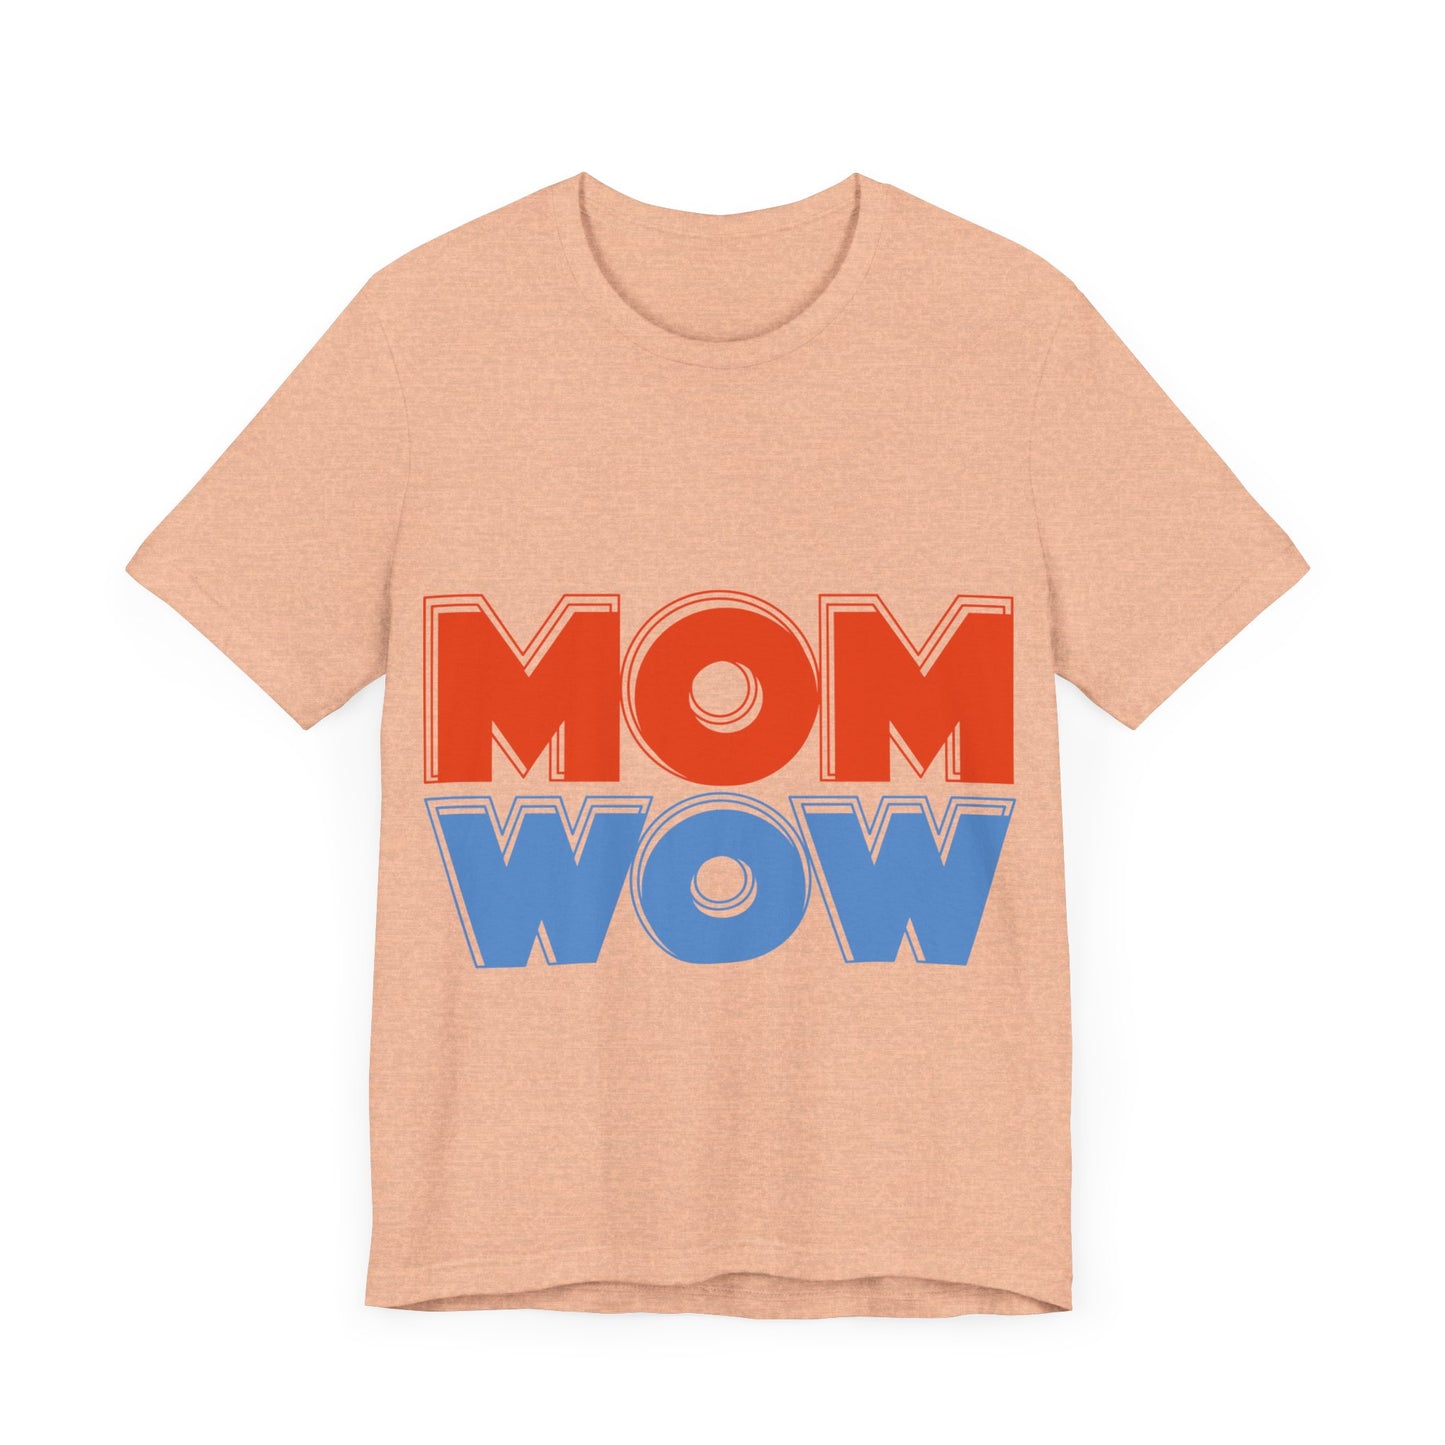 MOM - WOW - Unisex Jersey Short Sleeve Tee